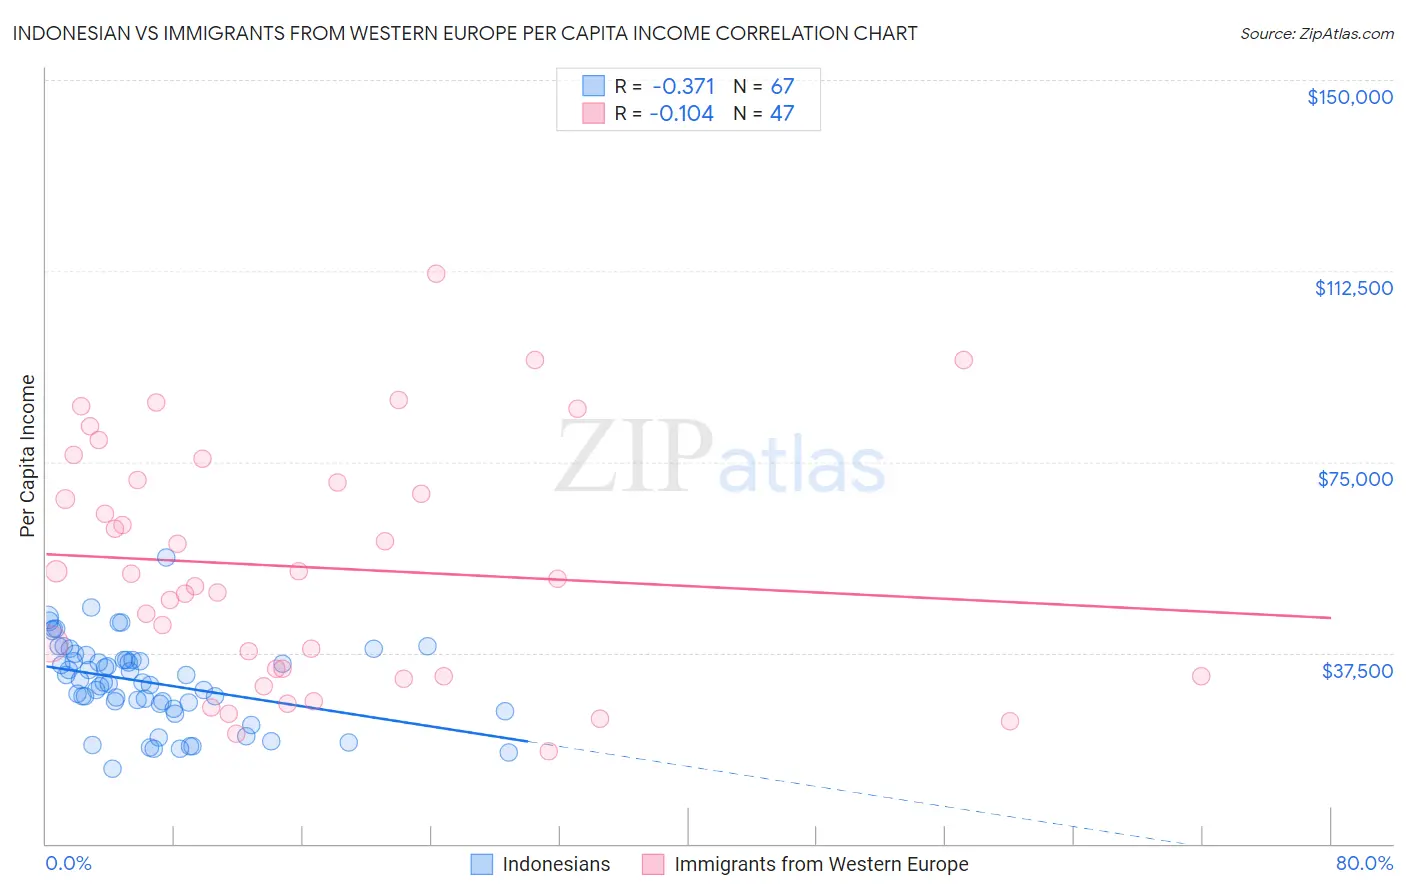 Indonesian vs Immigrants from Western Europe Per Capita Income